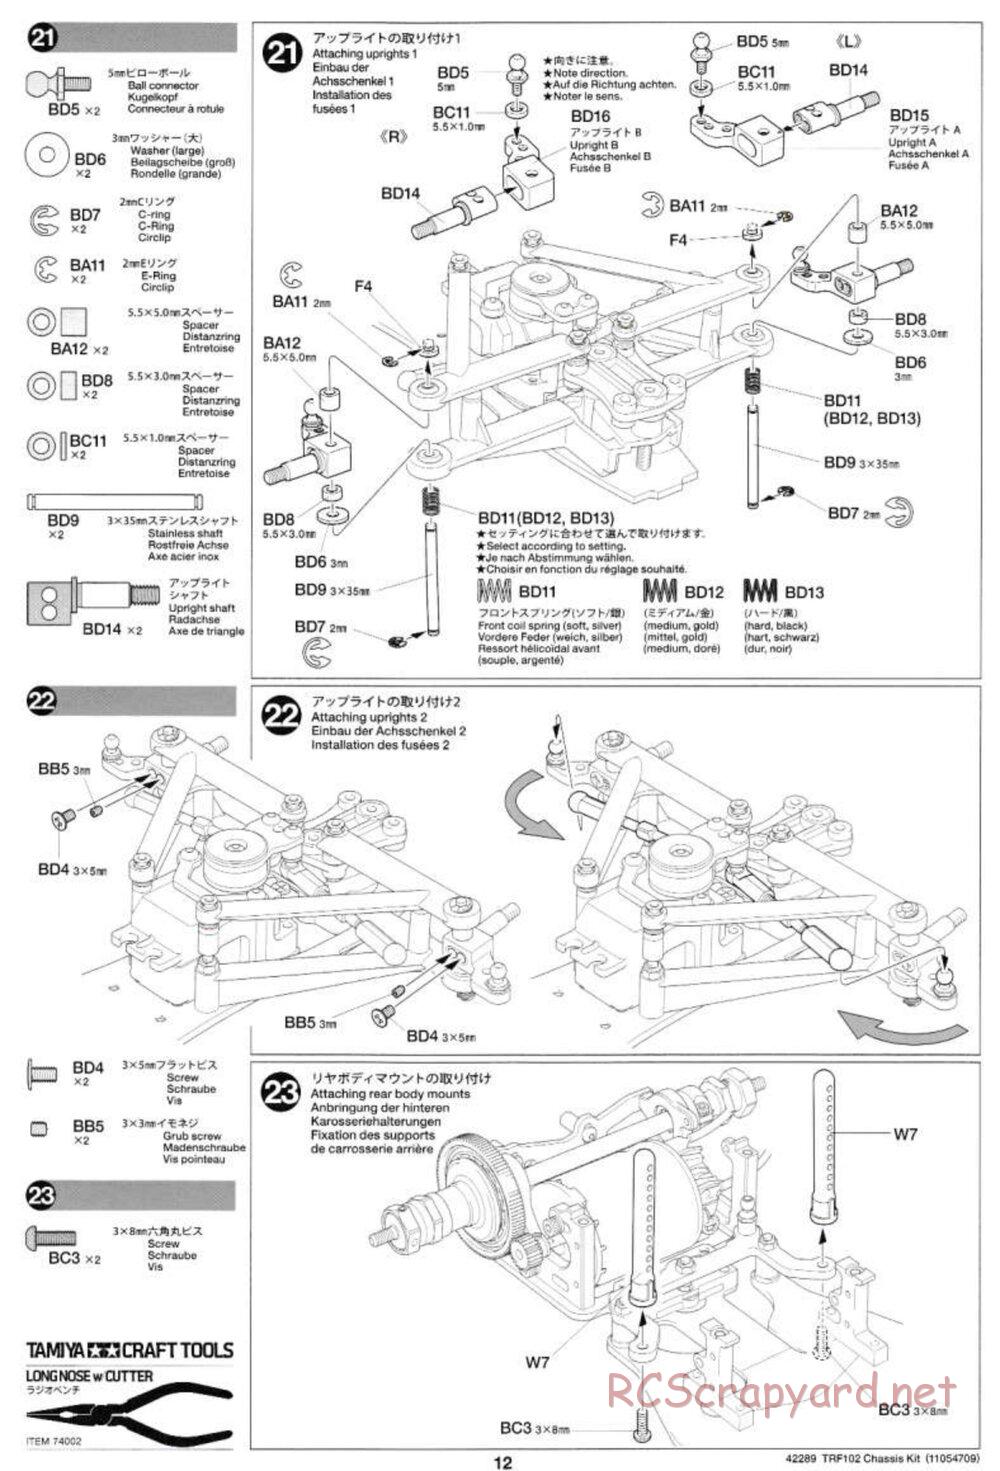 Tamiya - TRF102 Chassis - Manual - Page 12